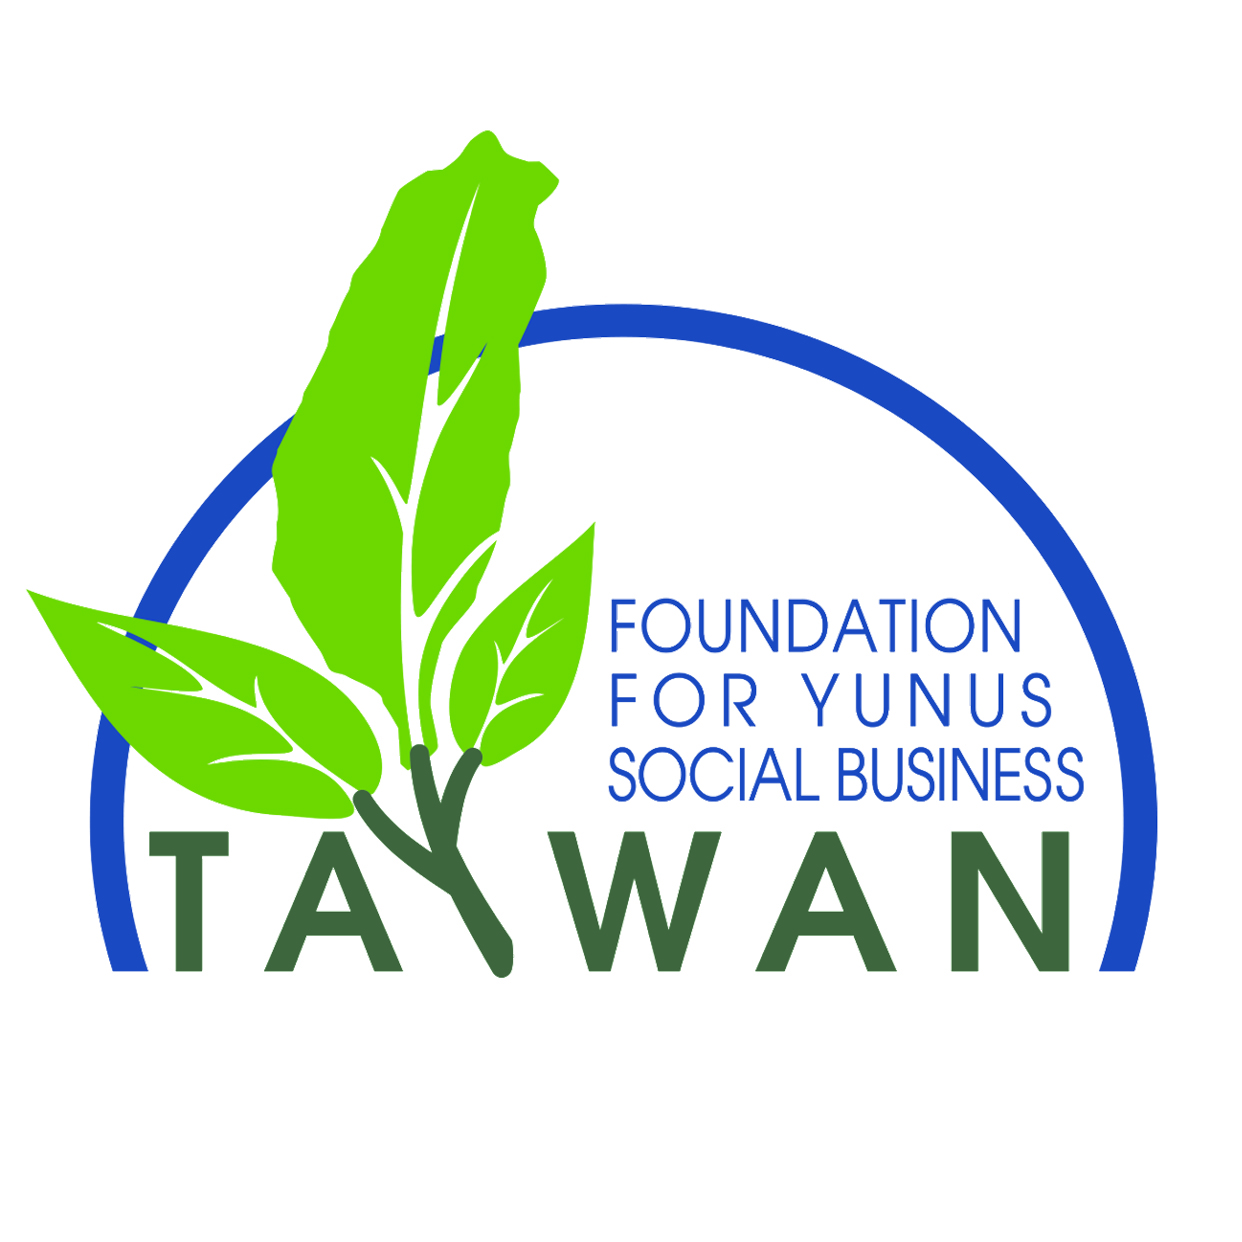 Foundation for Yunus Social Business Taiwan